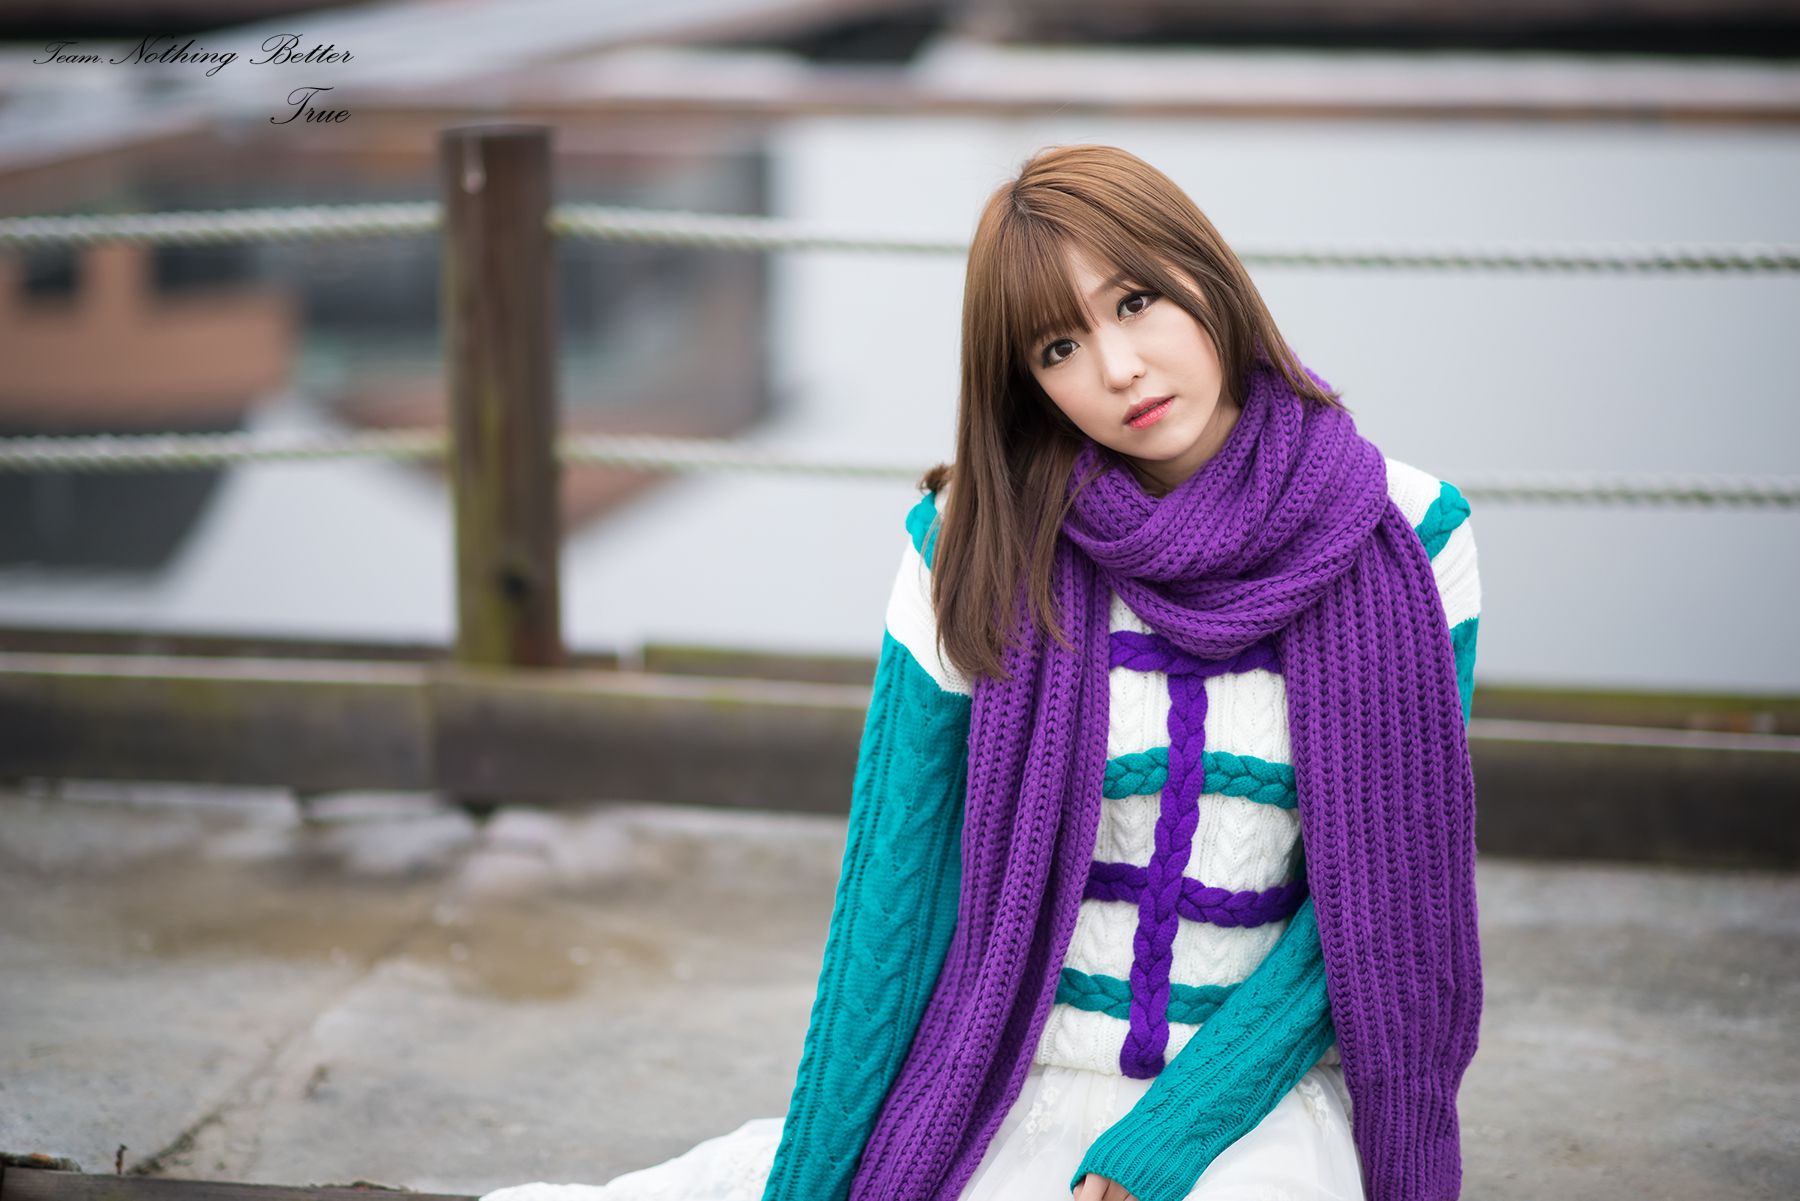 Li Renhui “outdoor small fresh scarf series” photo set set